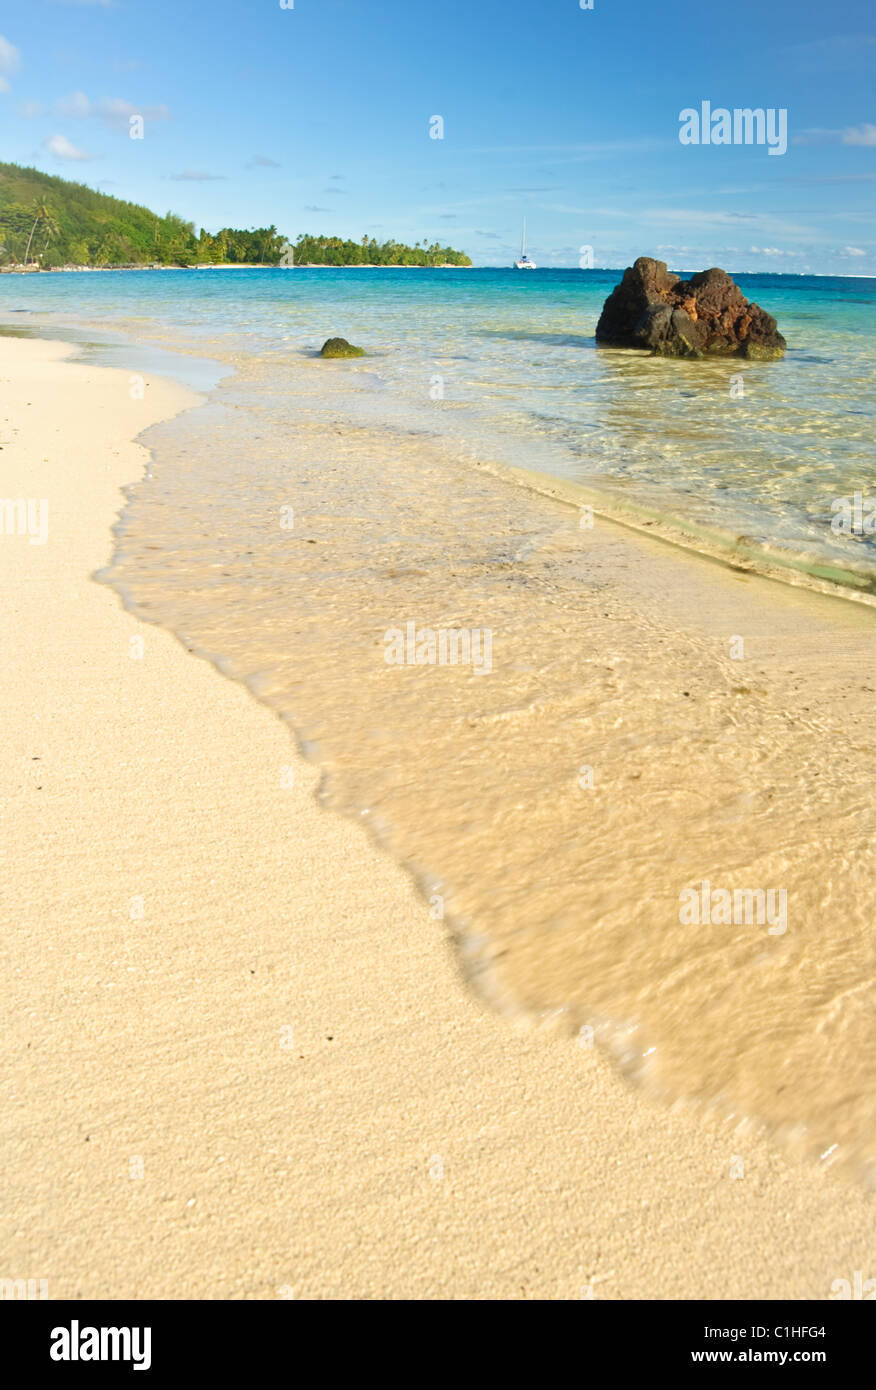 tropical beach in french polynesia Stock Photo